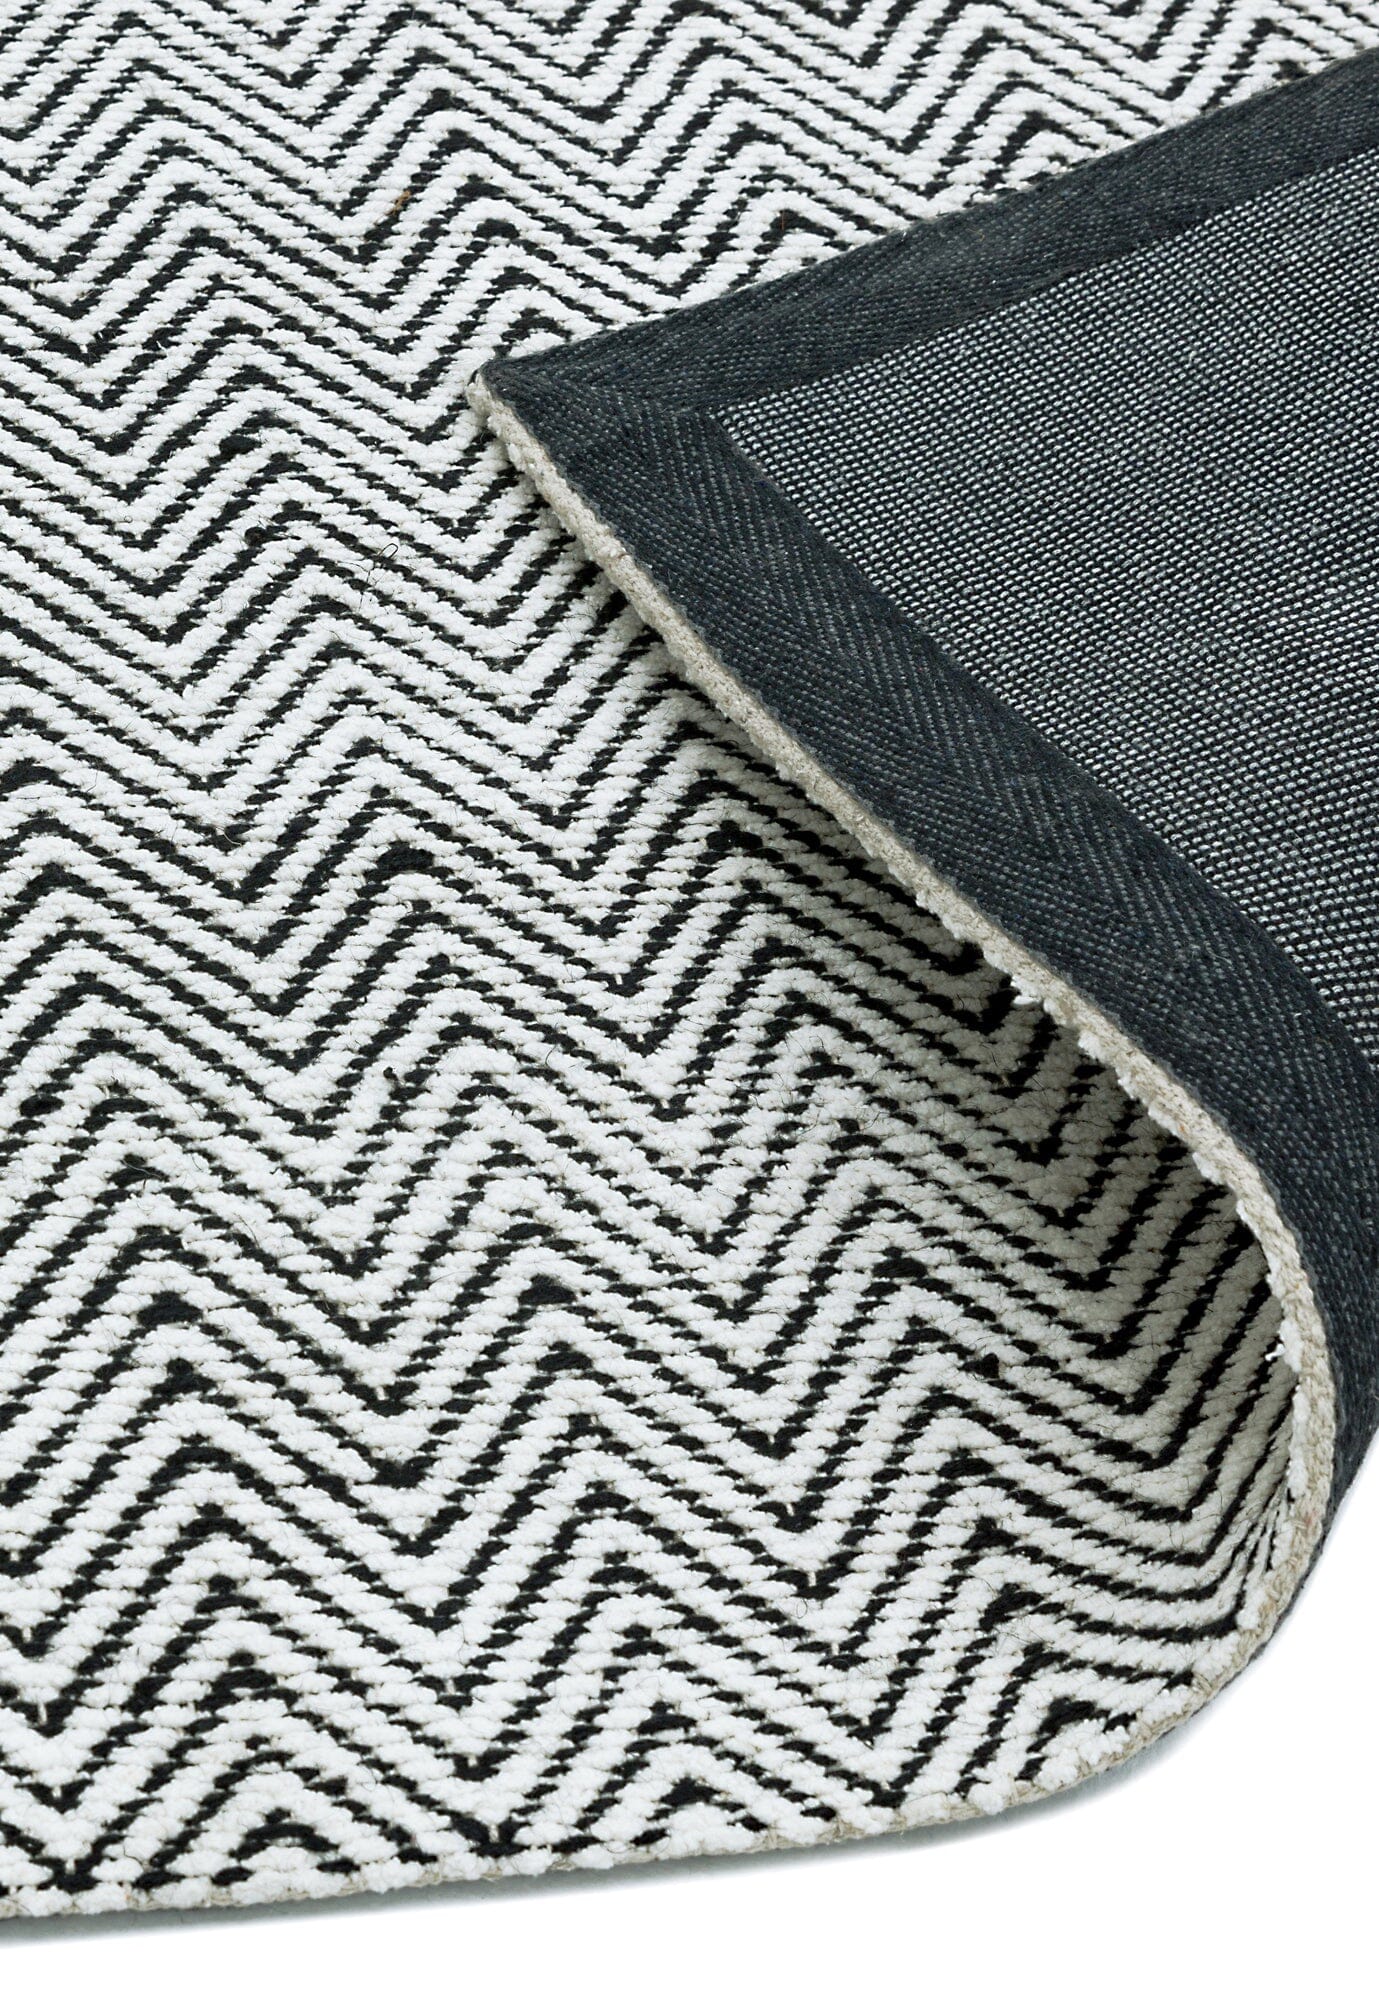  Asiatic Carpets-Asiatic Carpets Ives Hand Woven Rug Black White - 160 x 230cm-Black, White 269 